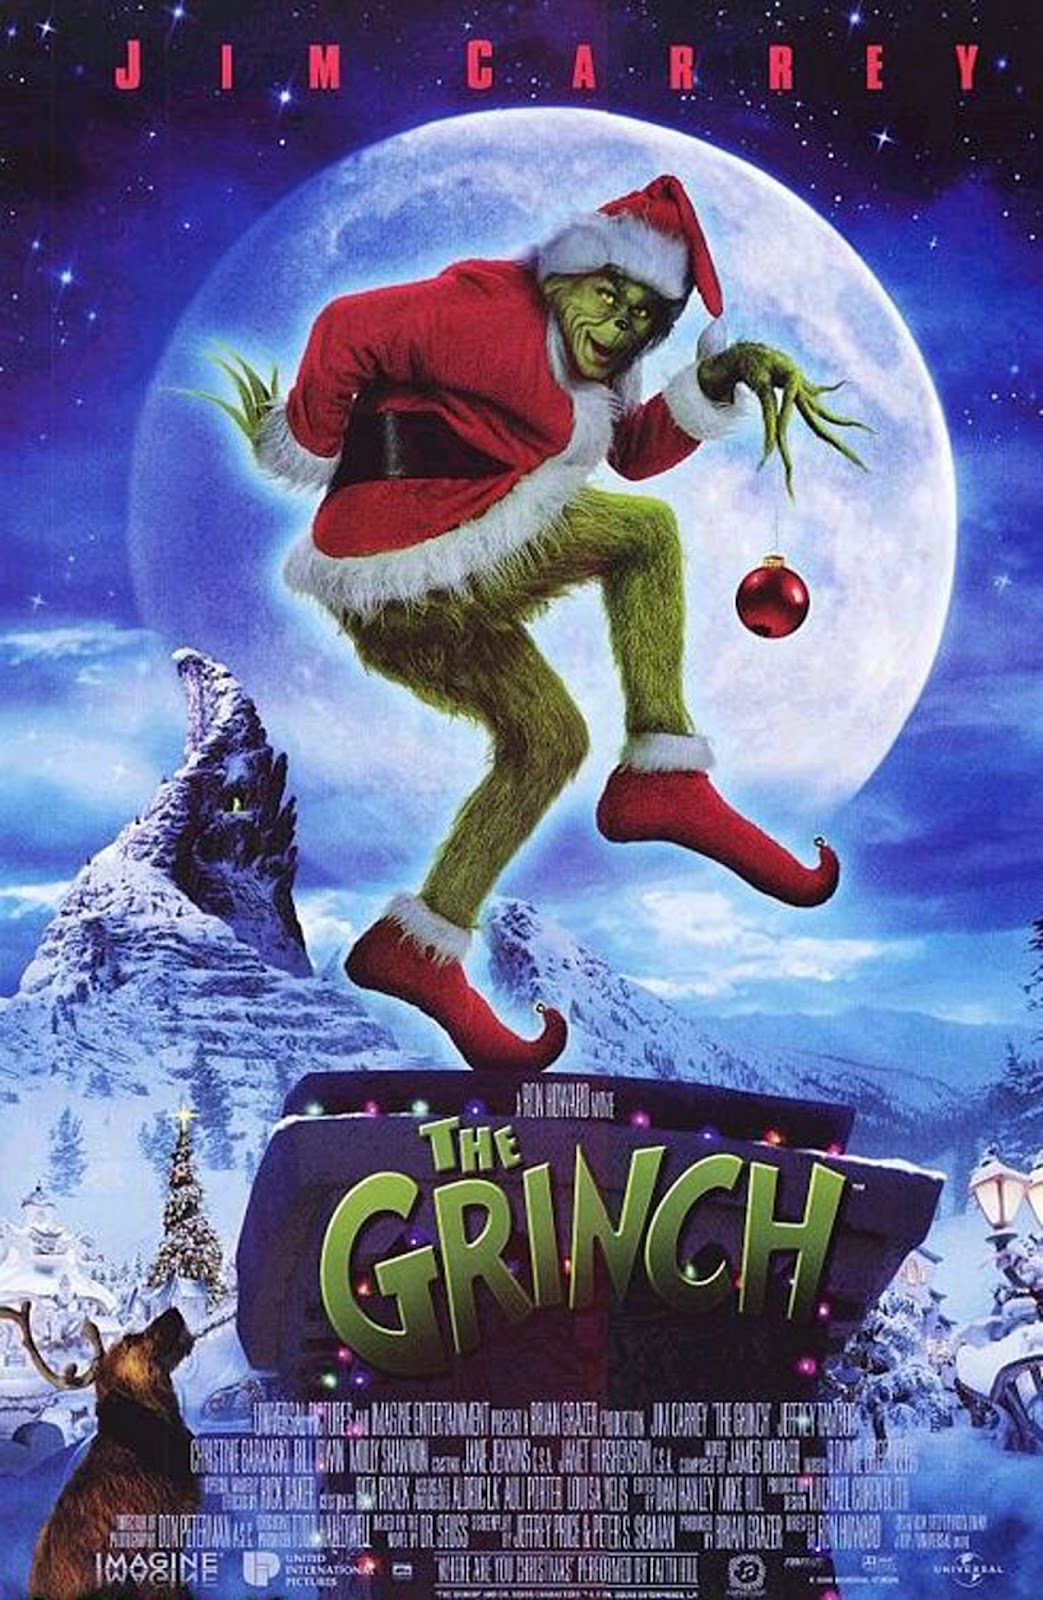 http://2.bp.blogspot.com/-CyR5H3VblK8/UHQRMHzzvbI/AAAAAAAAY7Y/T6YY9zNvMa8/s1600/Dr.+Seuss%27+How+the+Grinch+Stole+Christmas+(2000).jpg